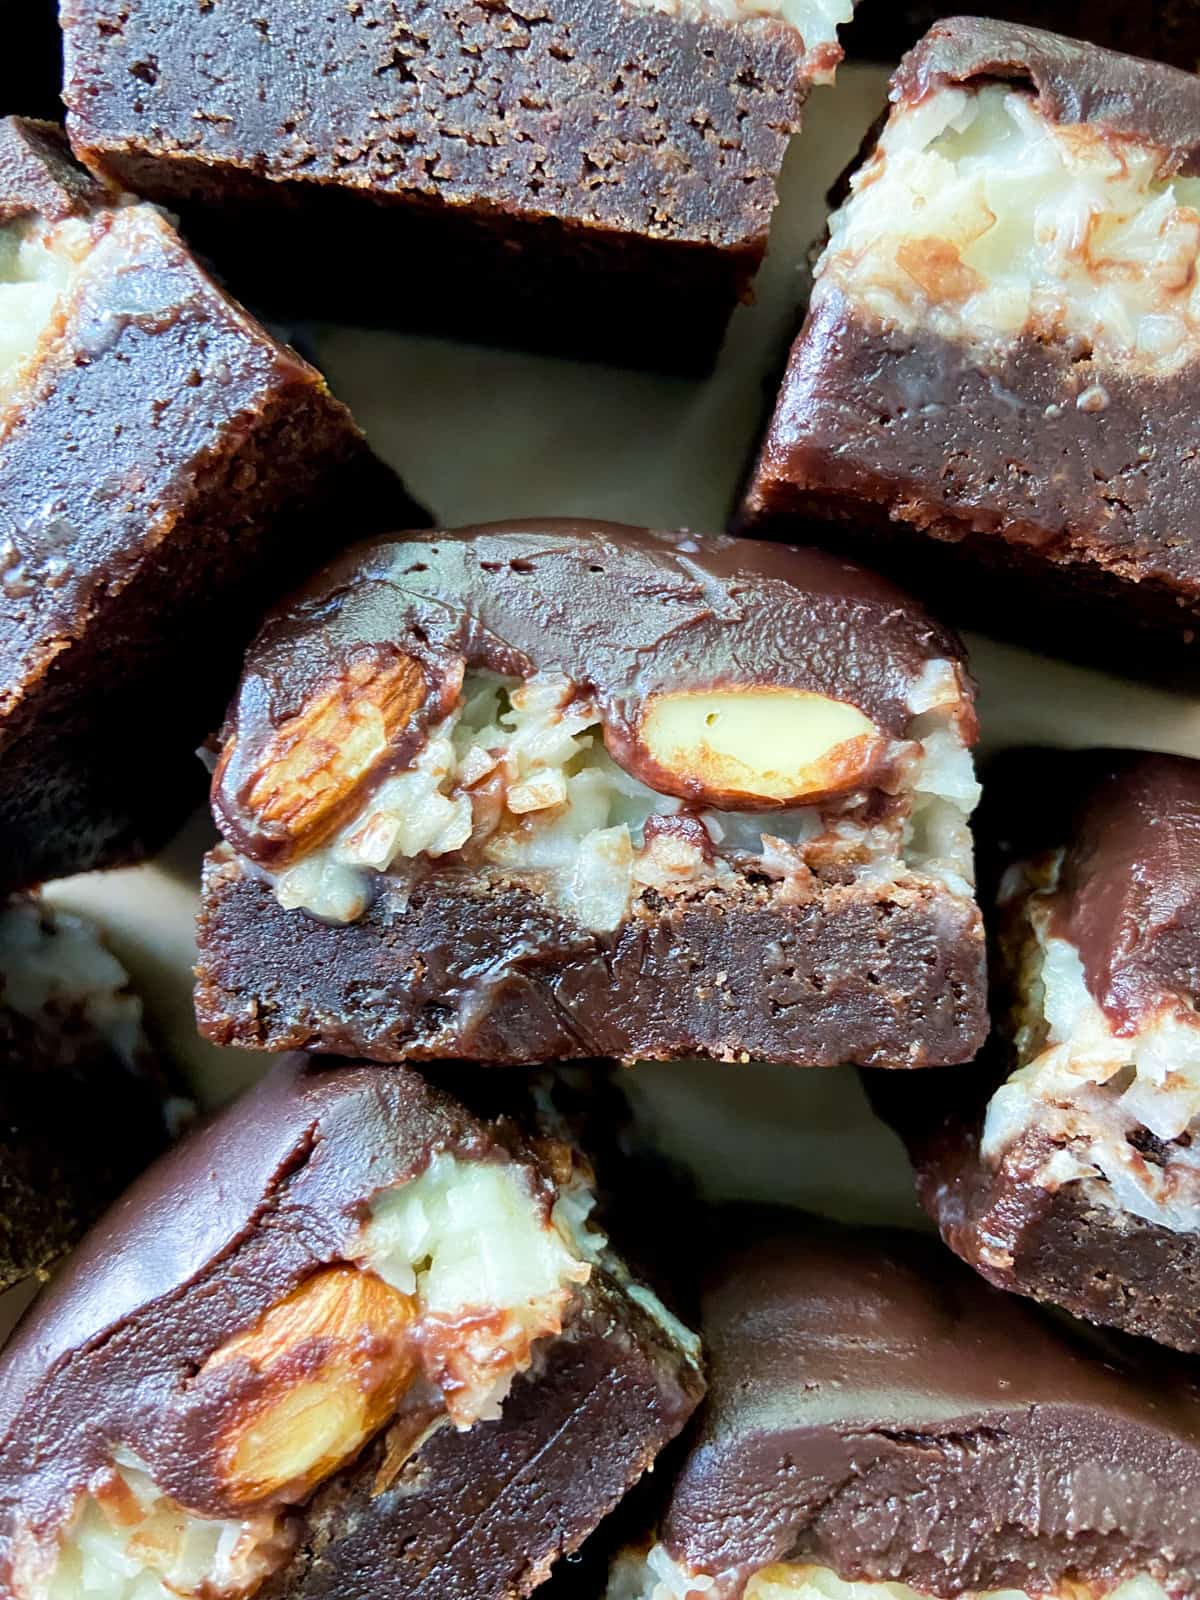 A close-up of an almond joy brownie.